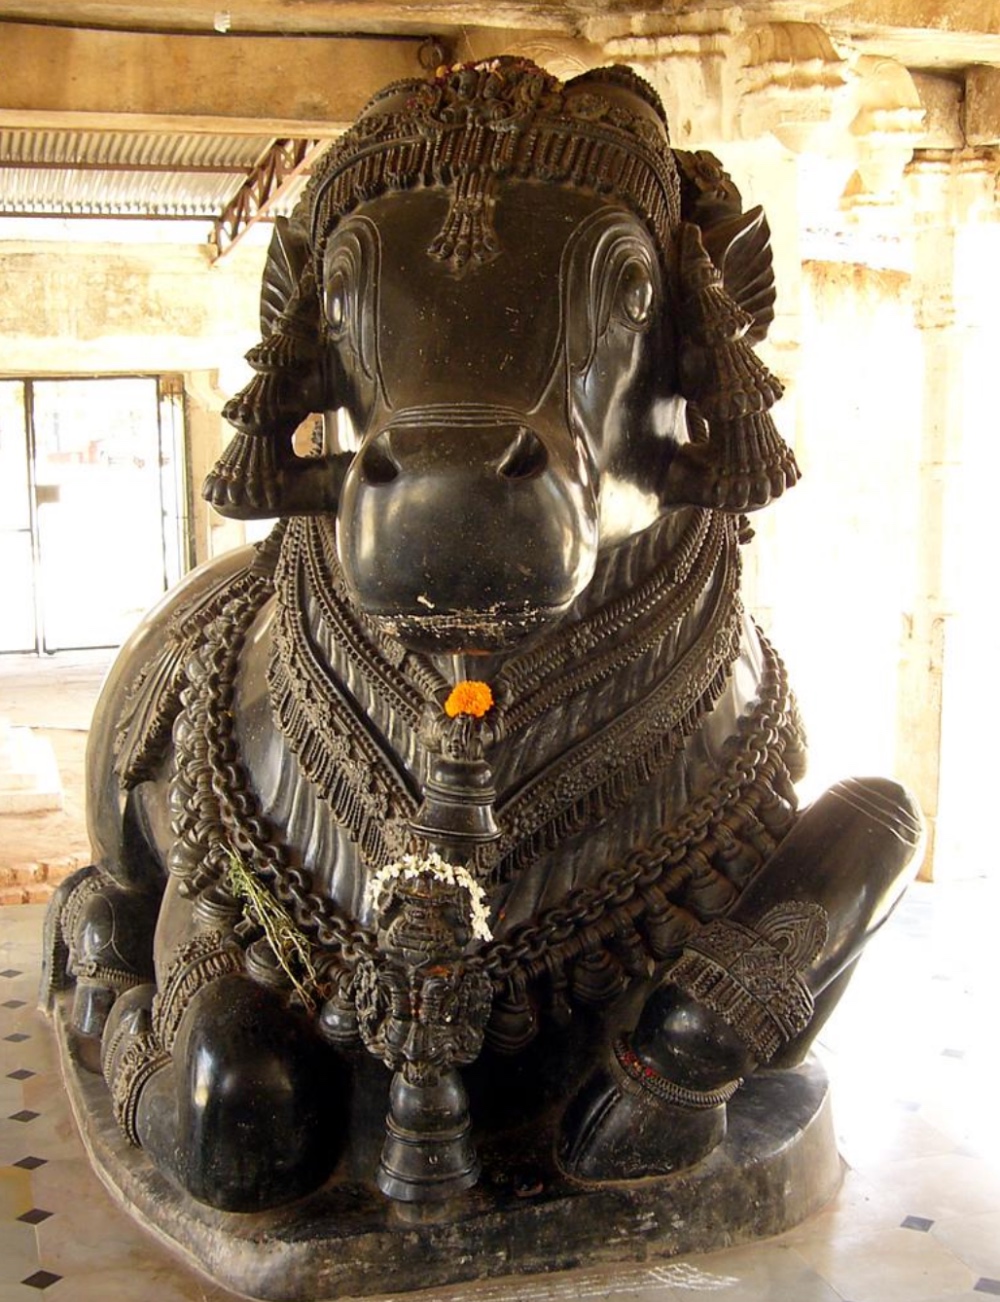 Turuvekere Hoysala temples